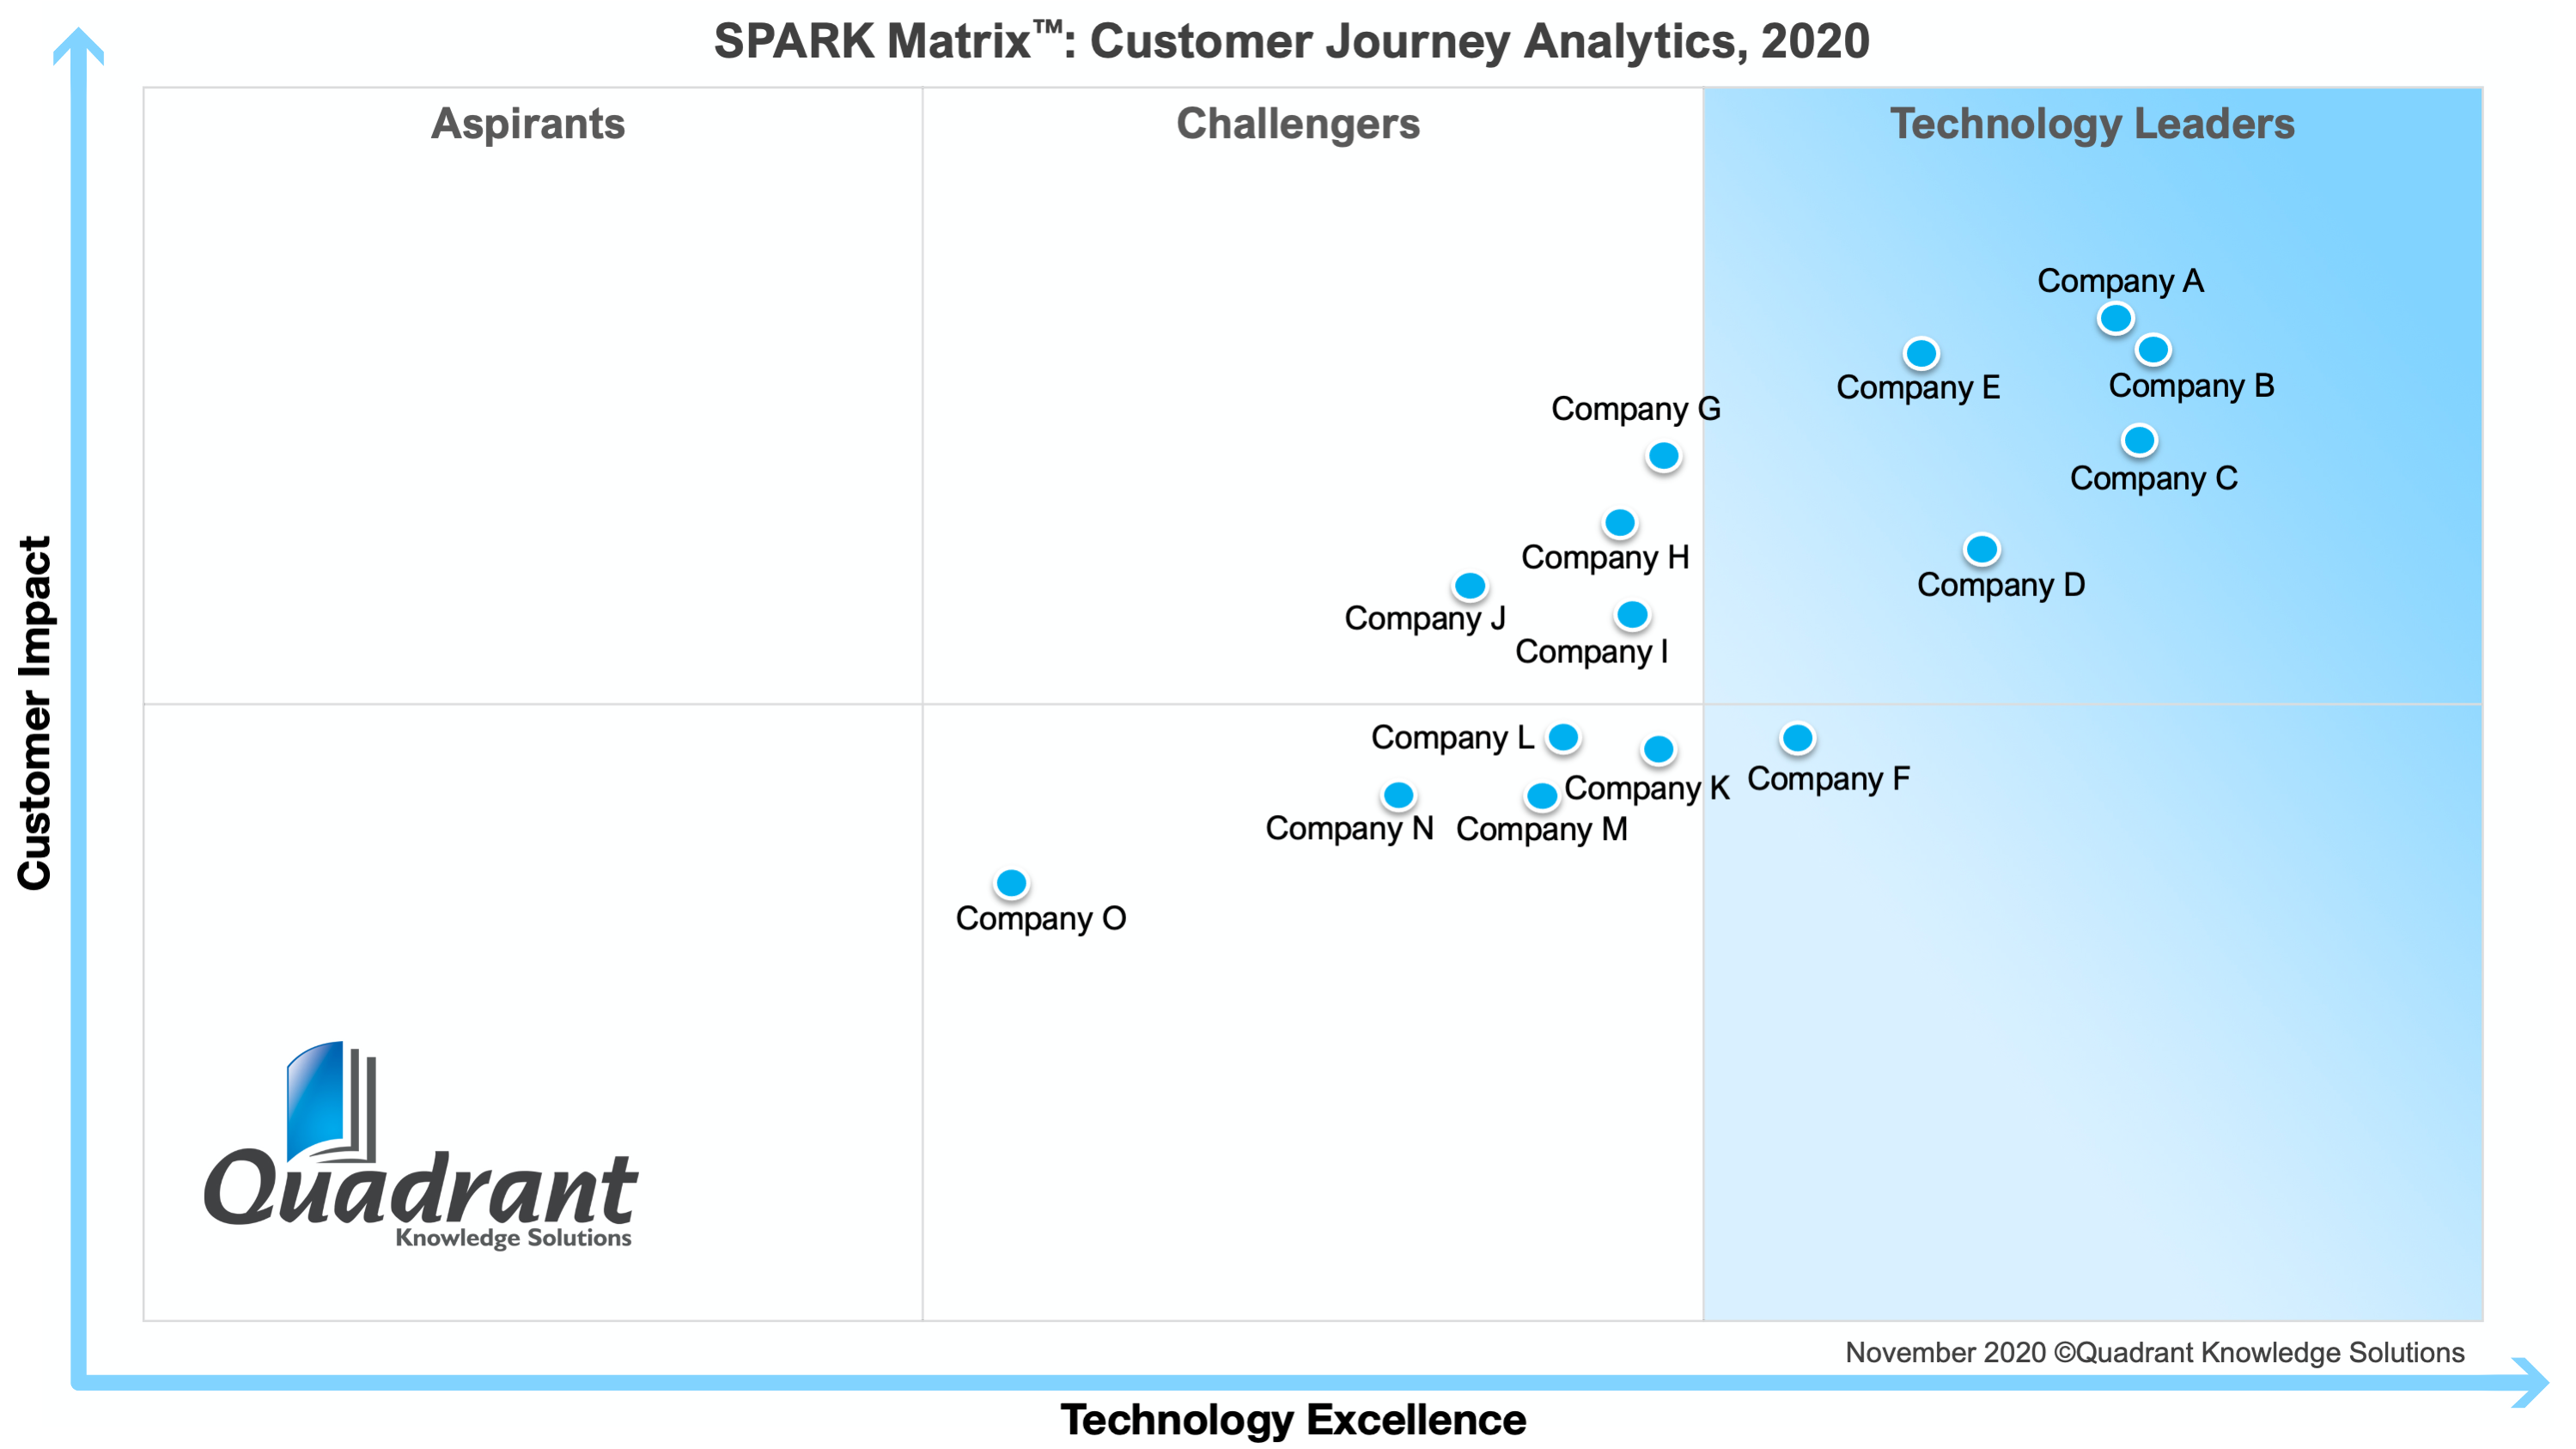 2020 SPARK Matrix Customer Journey Analytics Quadrant Knowledge Solutions